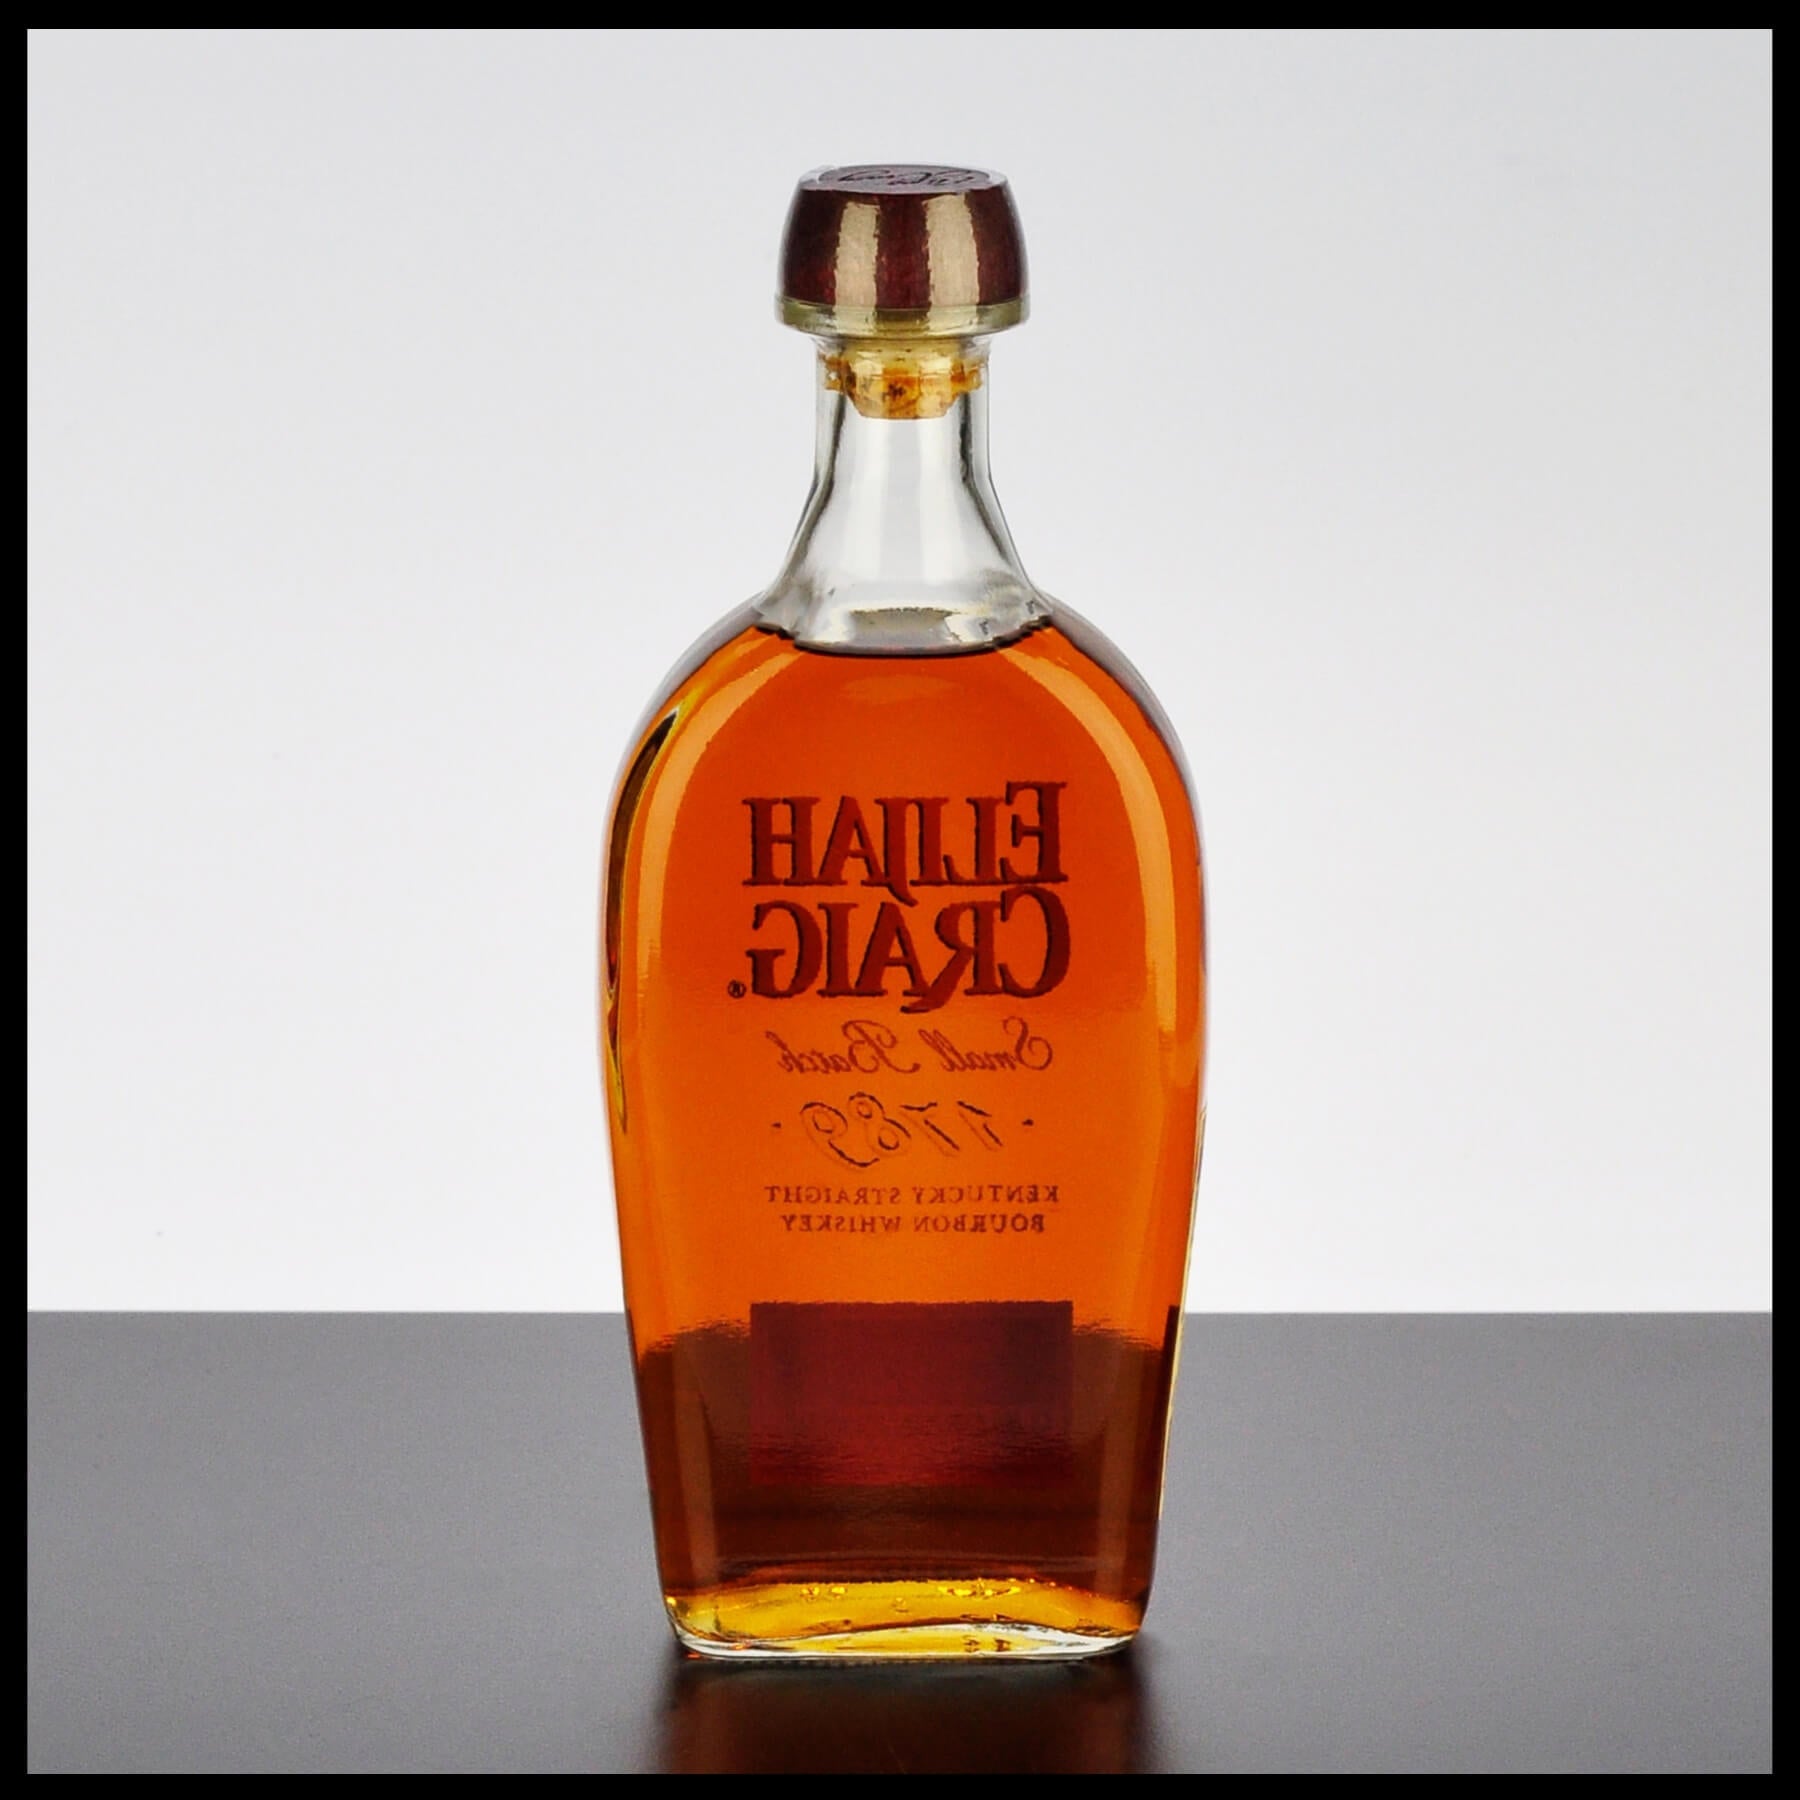 Elijah Craig Small Batch Kentucky Straight Bourbon Whiskey 0,7L - 47% Vol. - Trinklusiv